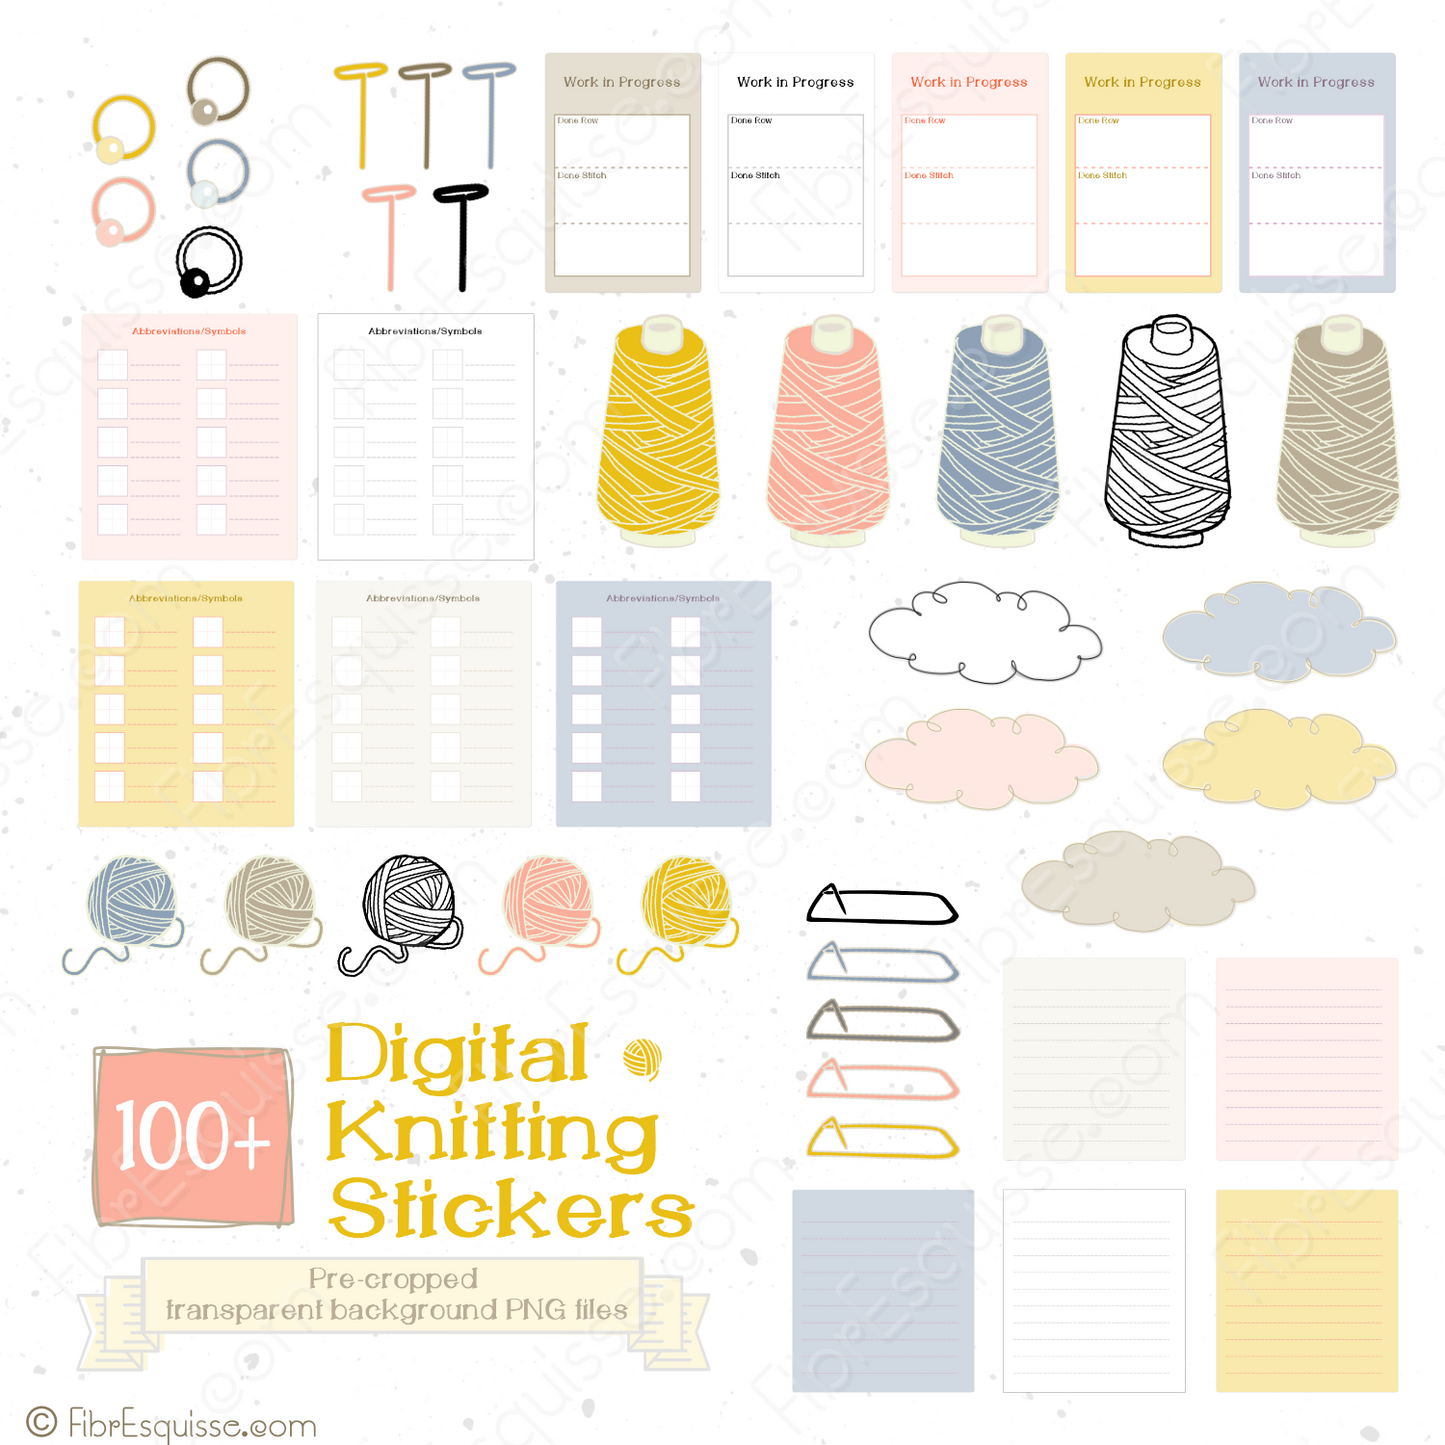 Knitting & Crocheting digital stickers